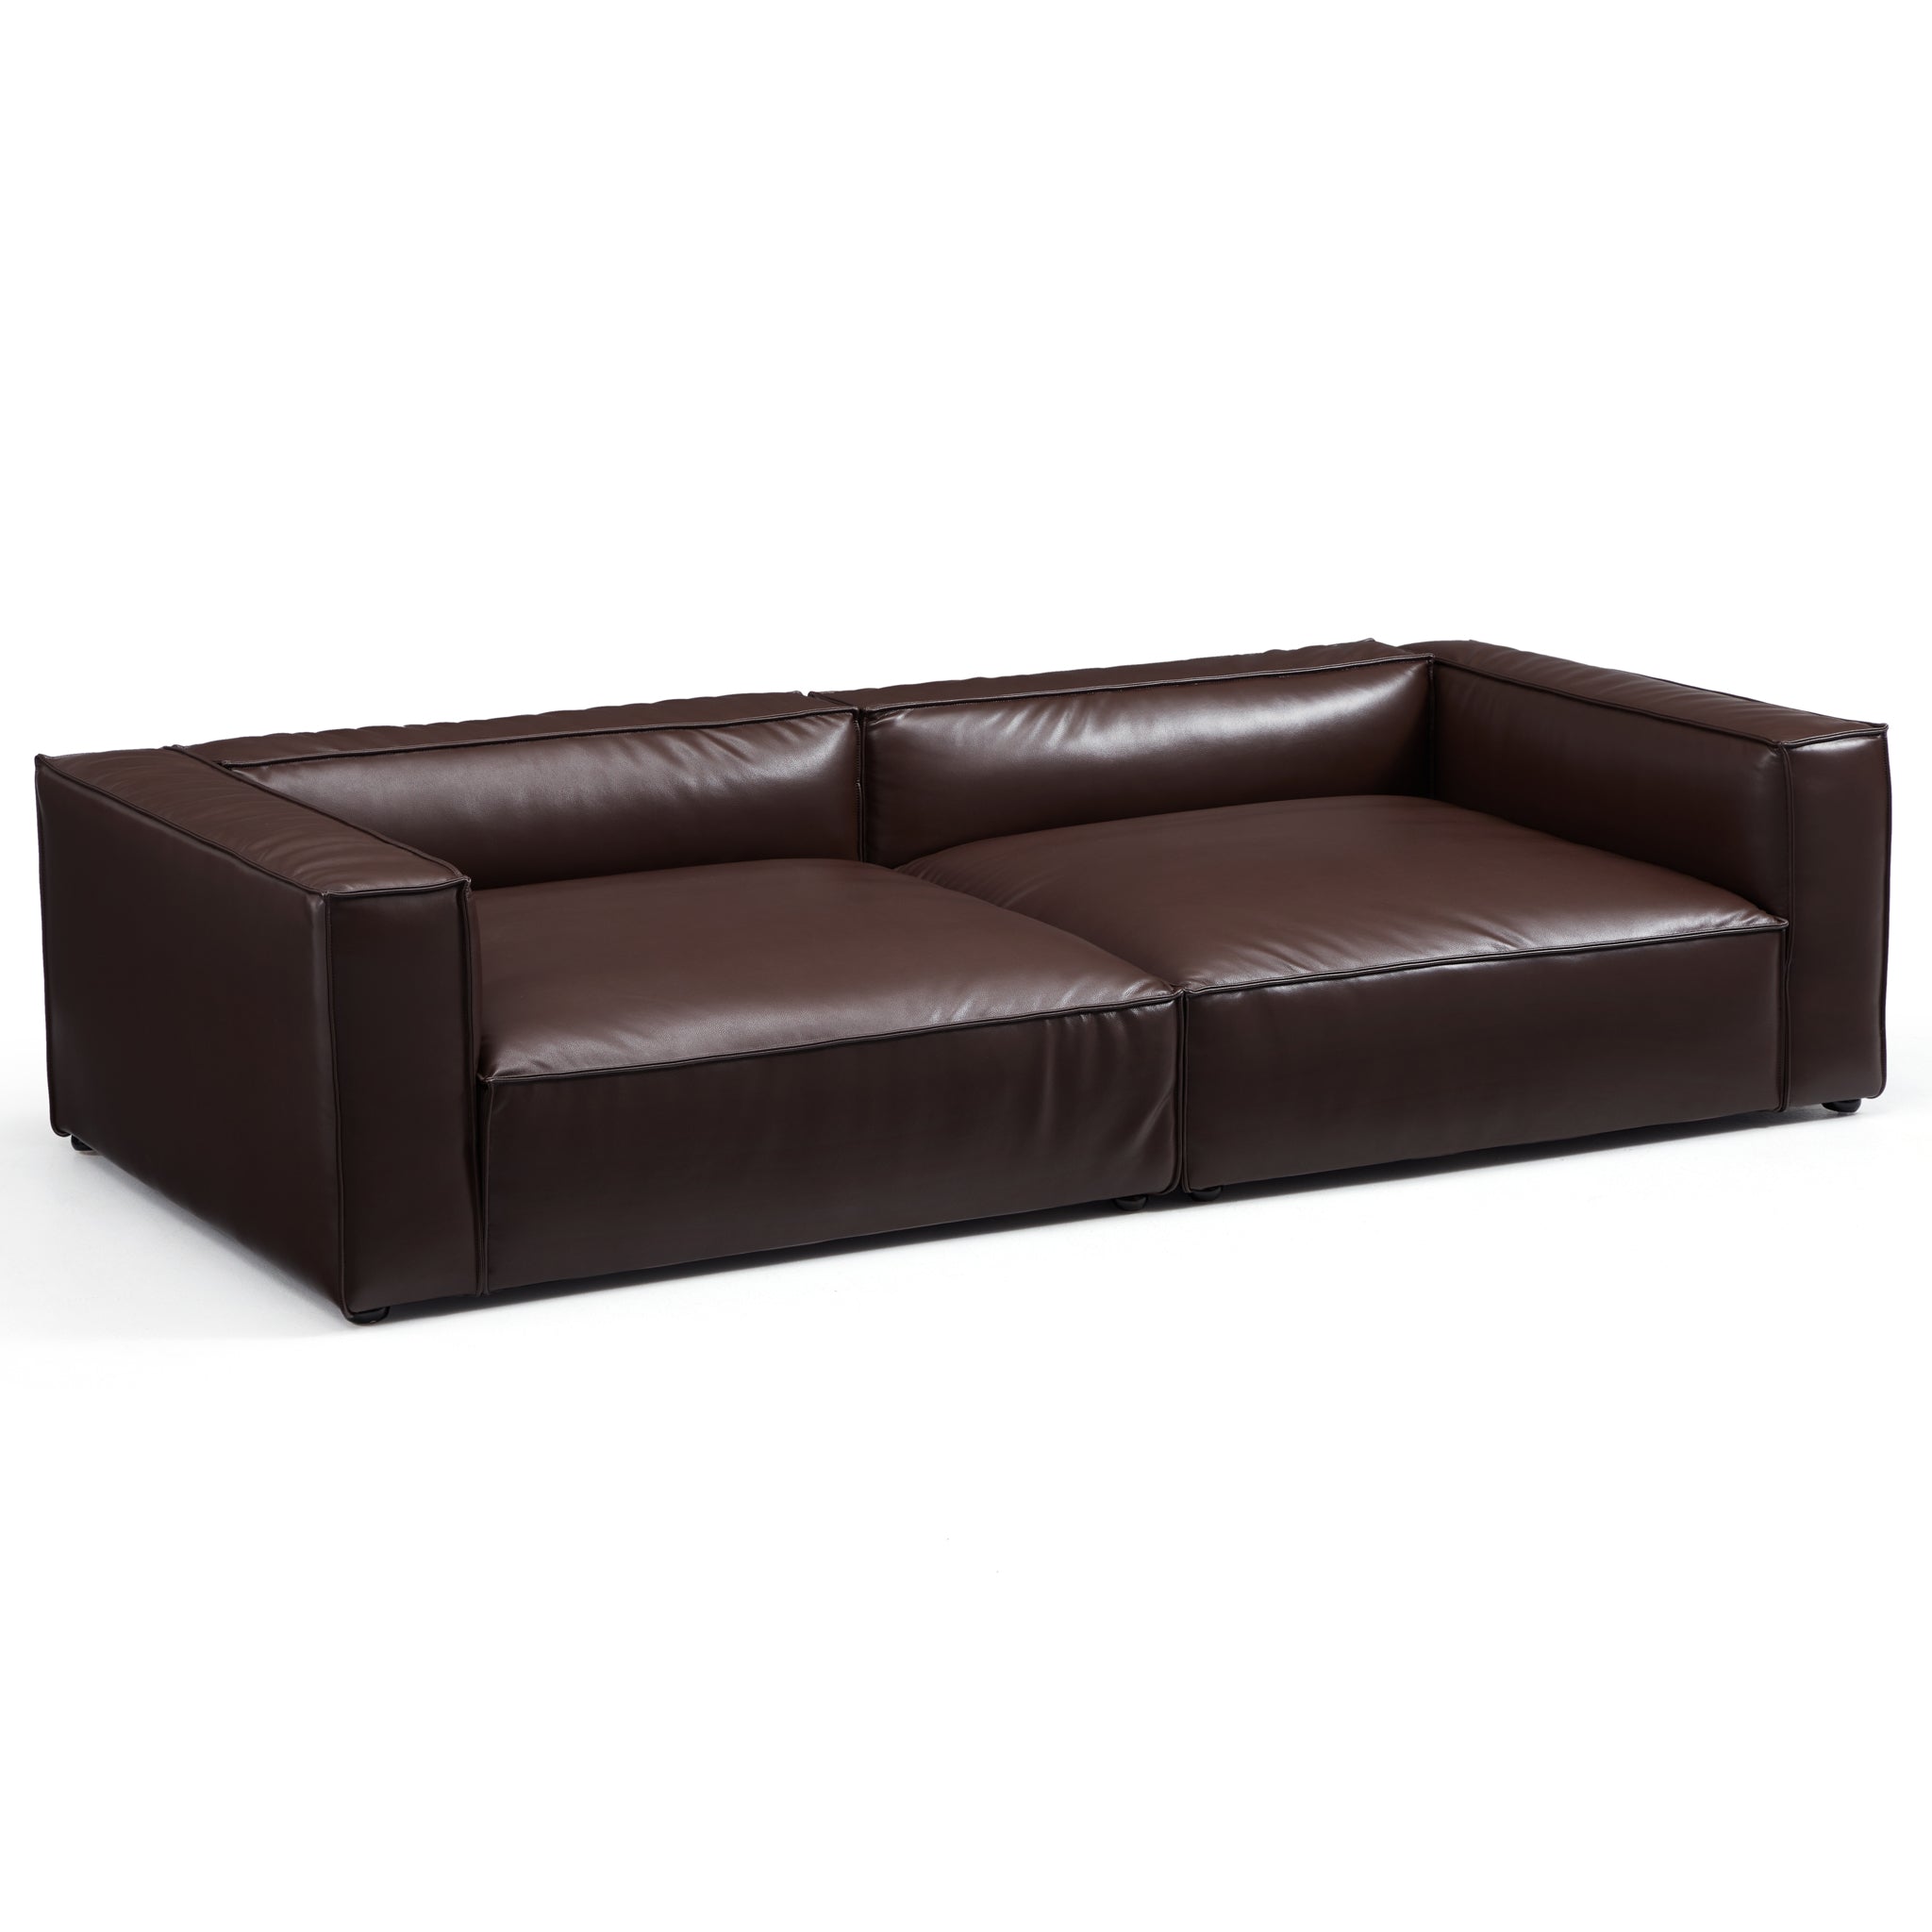 Luxury Minimalist Dark Brown Leather Daybed Sofa